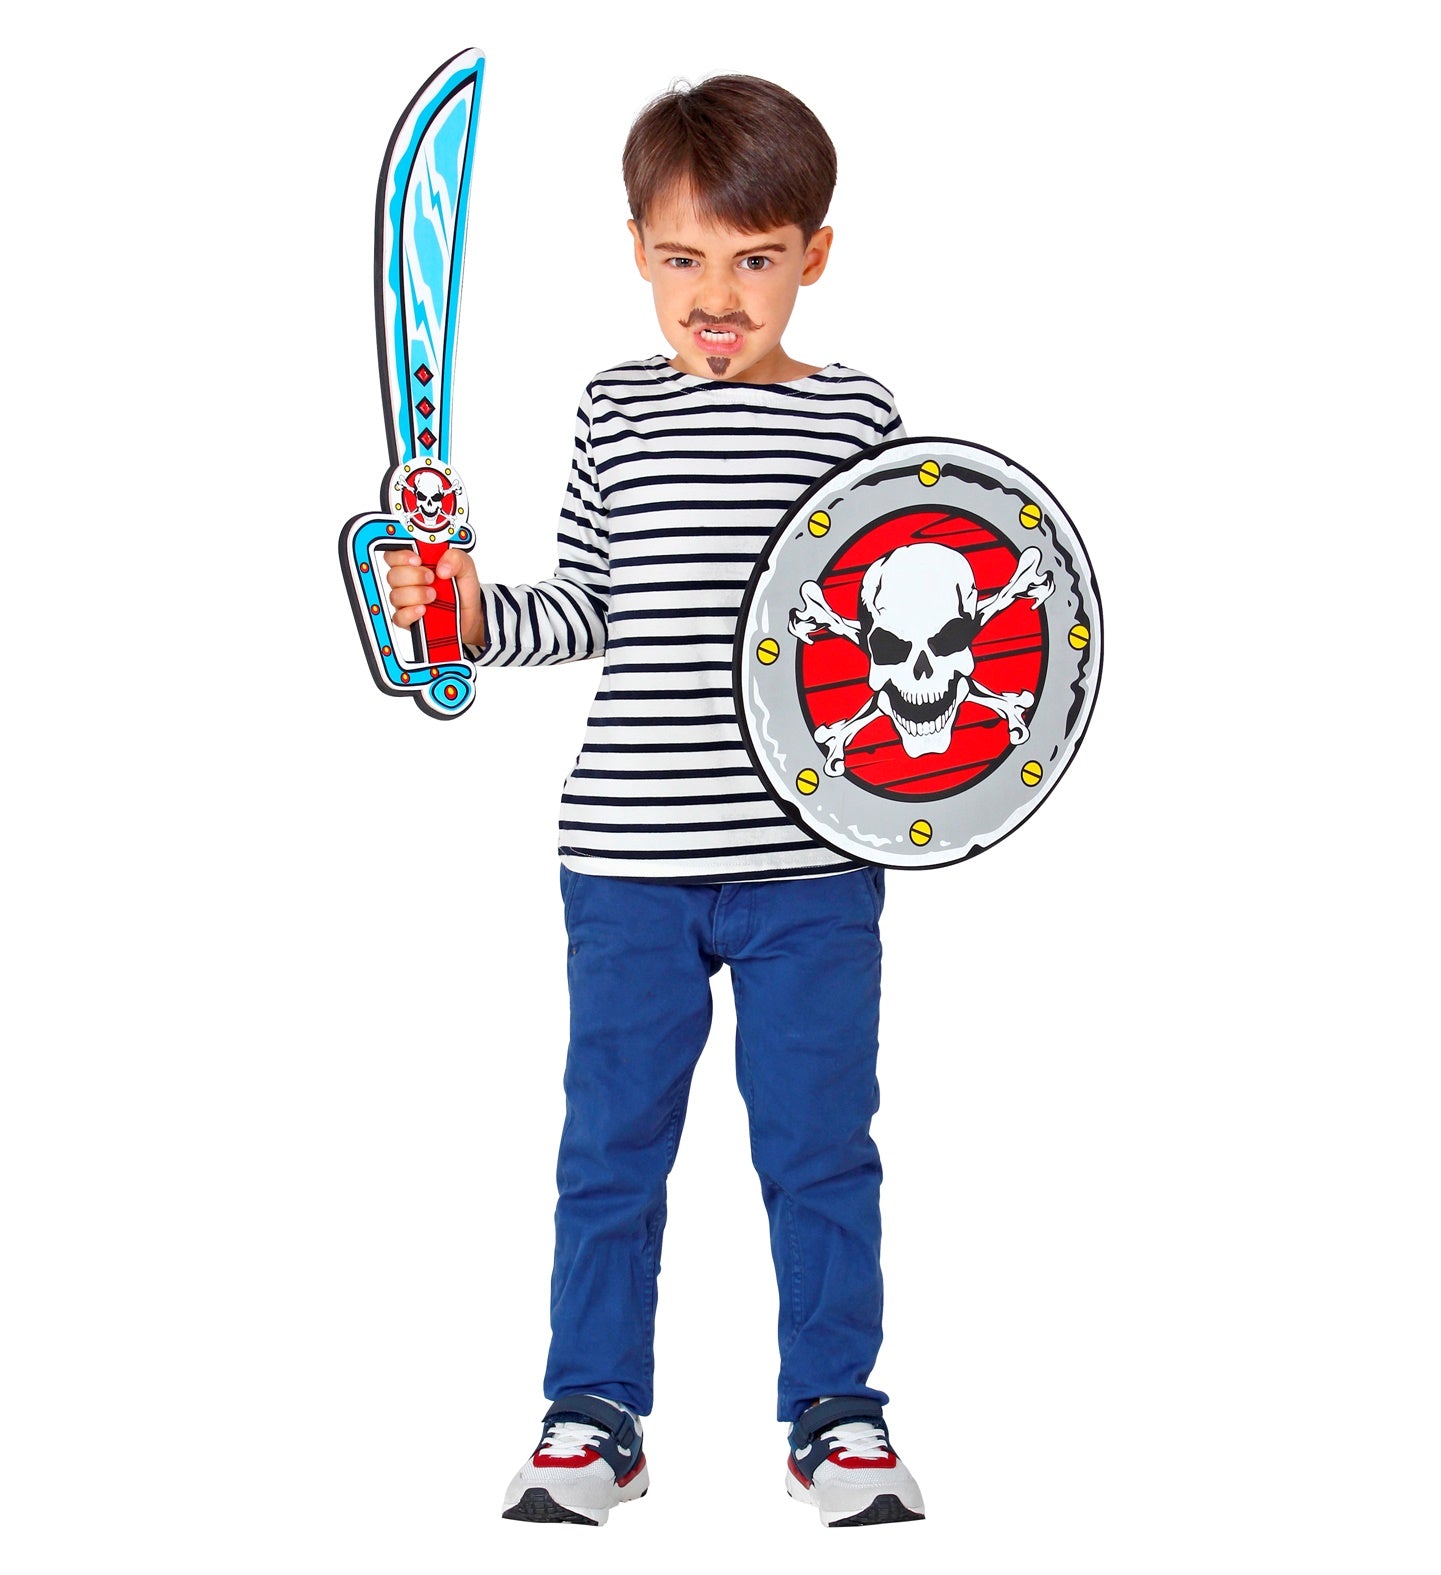 Skull Pirate Sword and Shield kit for kids